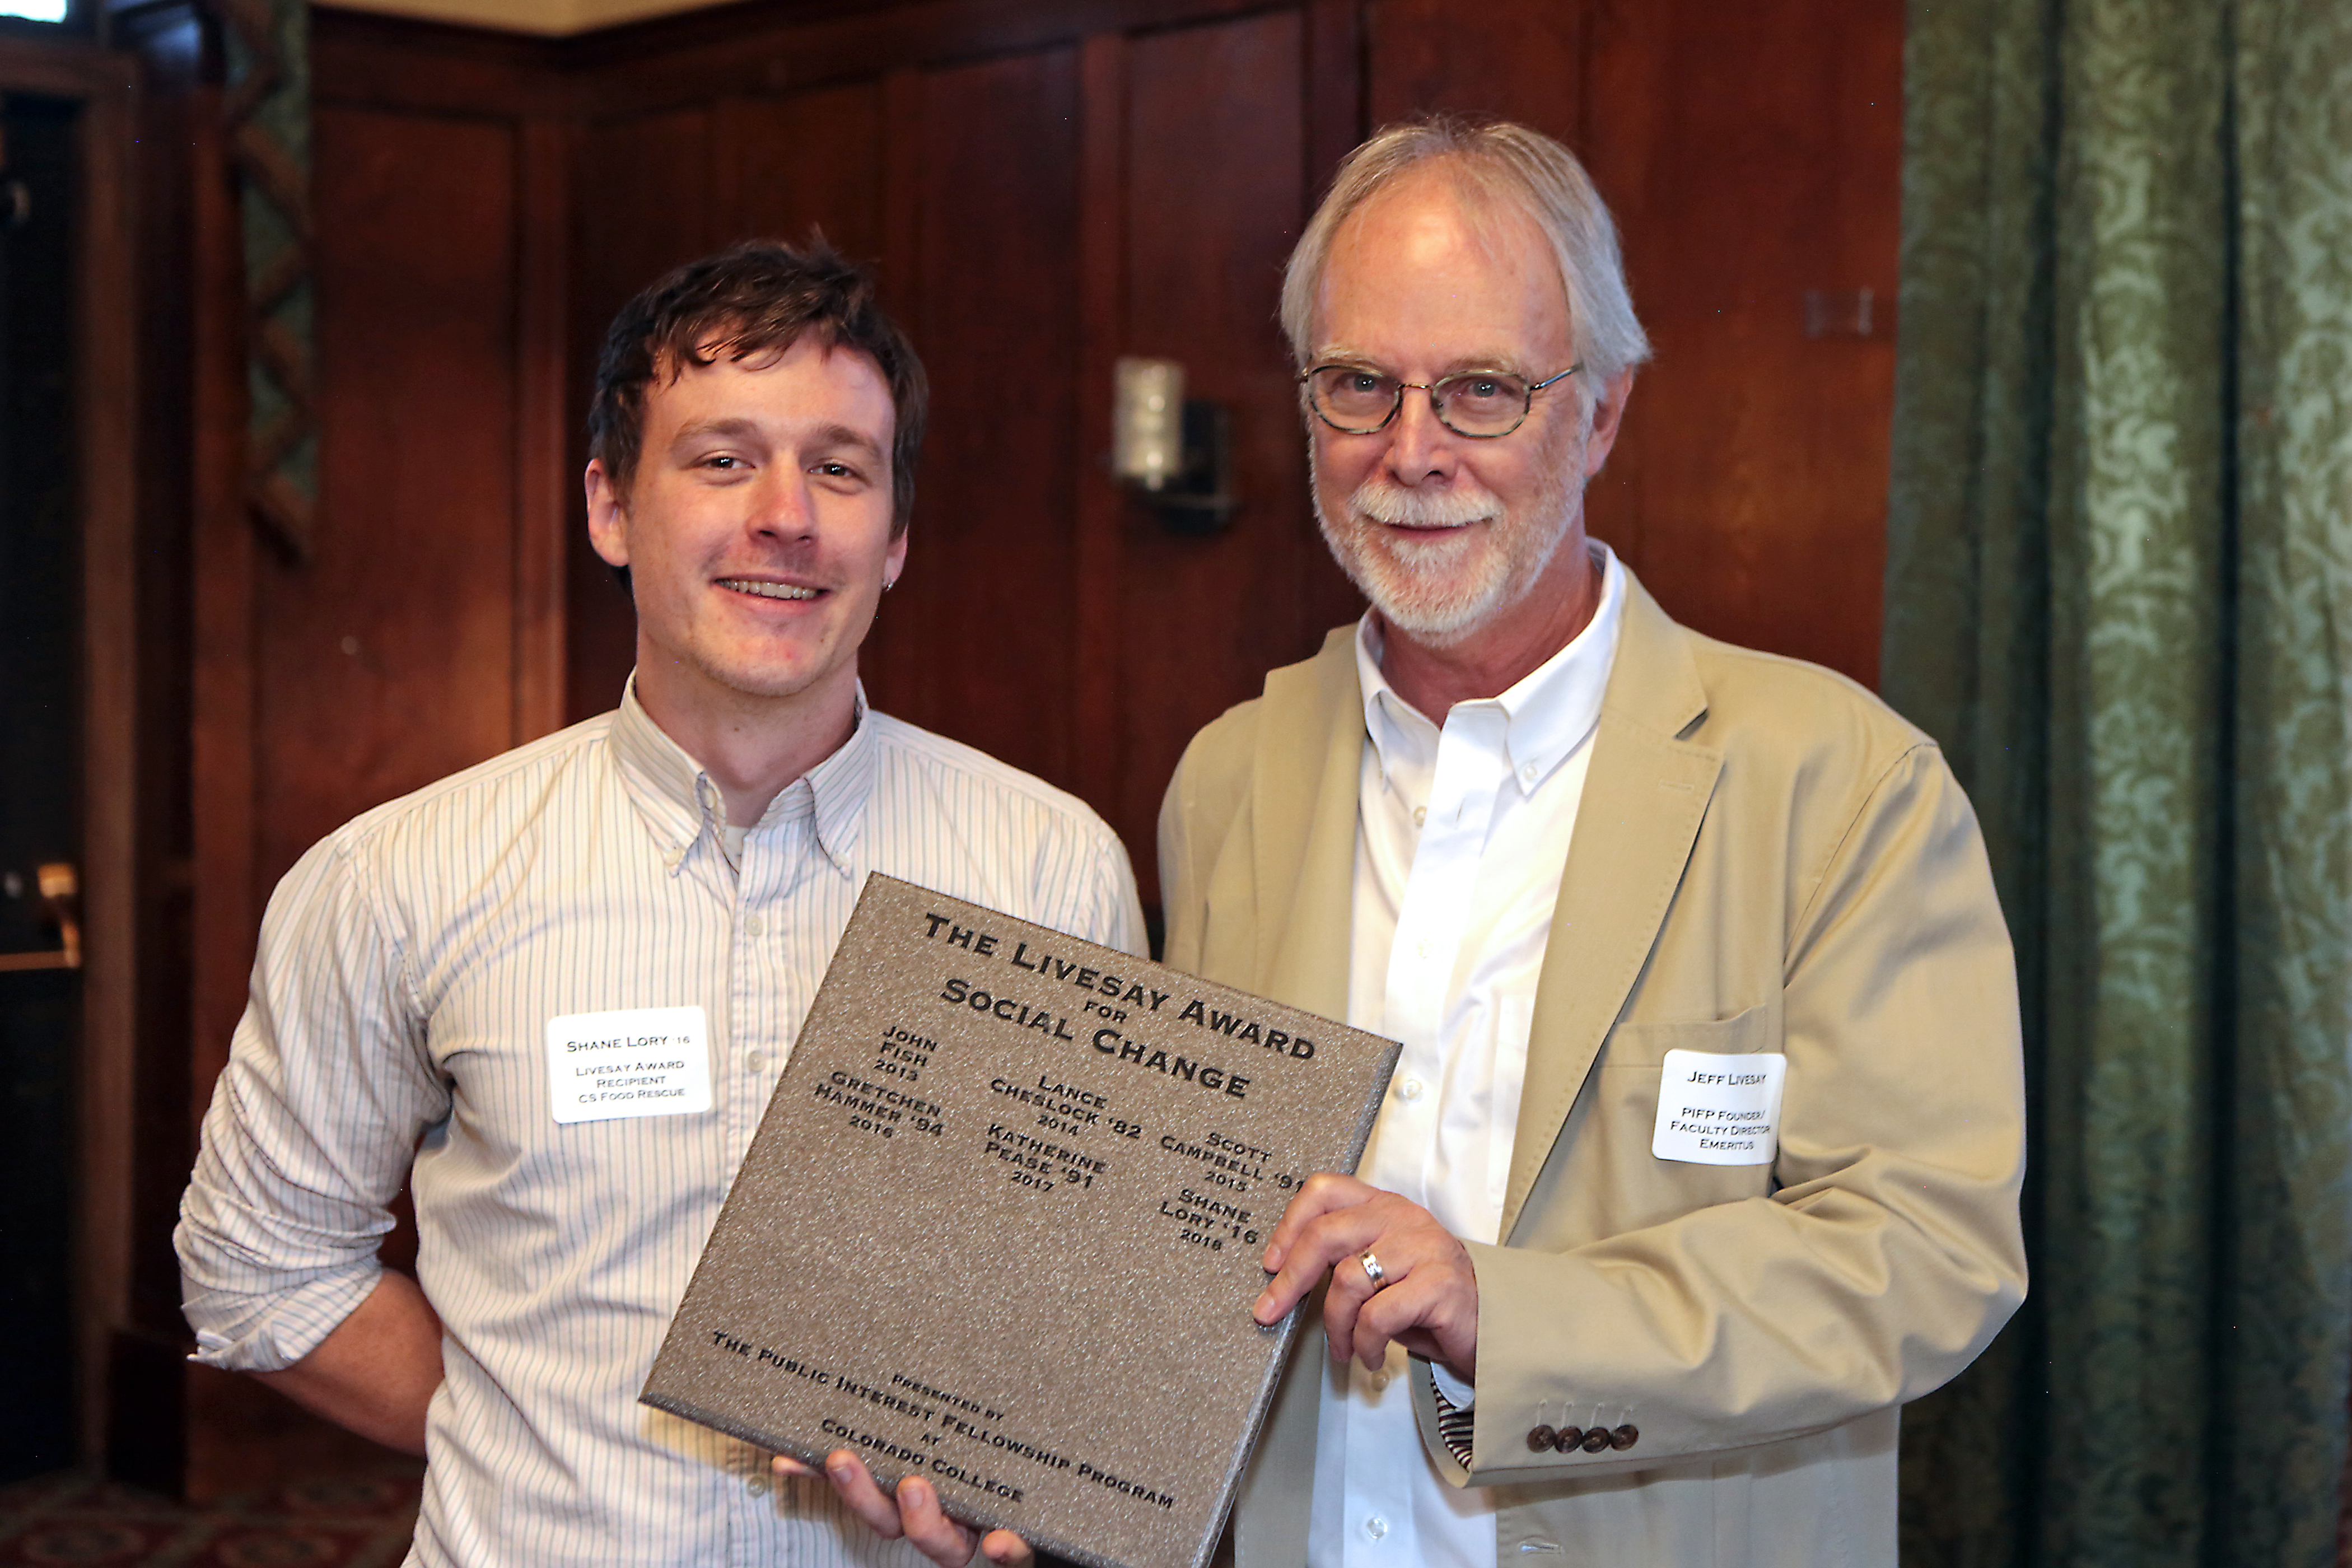 Shane Lory, 2018 Livesay Award for Social Change recipient, with Professor Emeritus Jeff Livesay